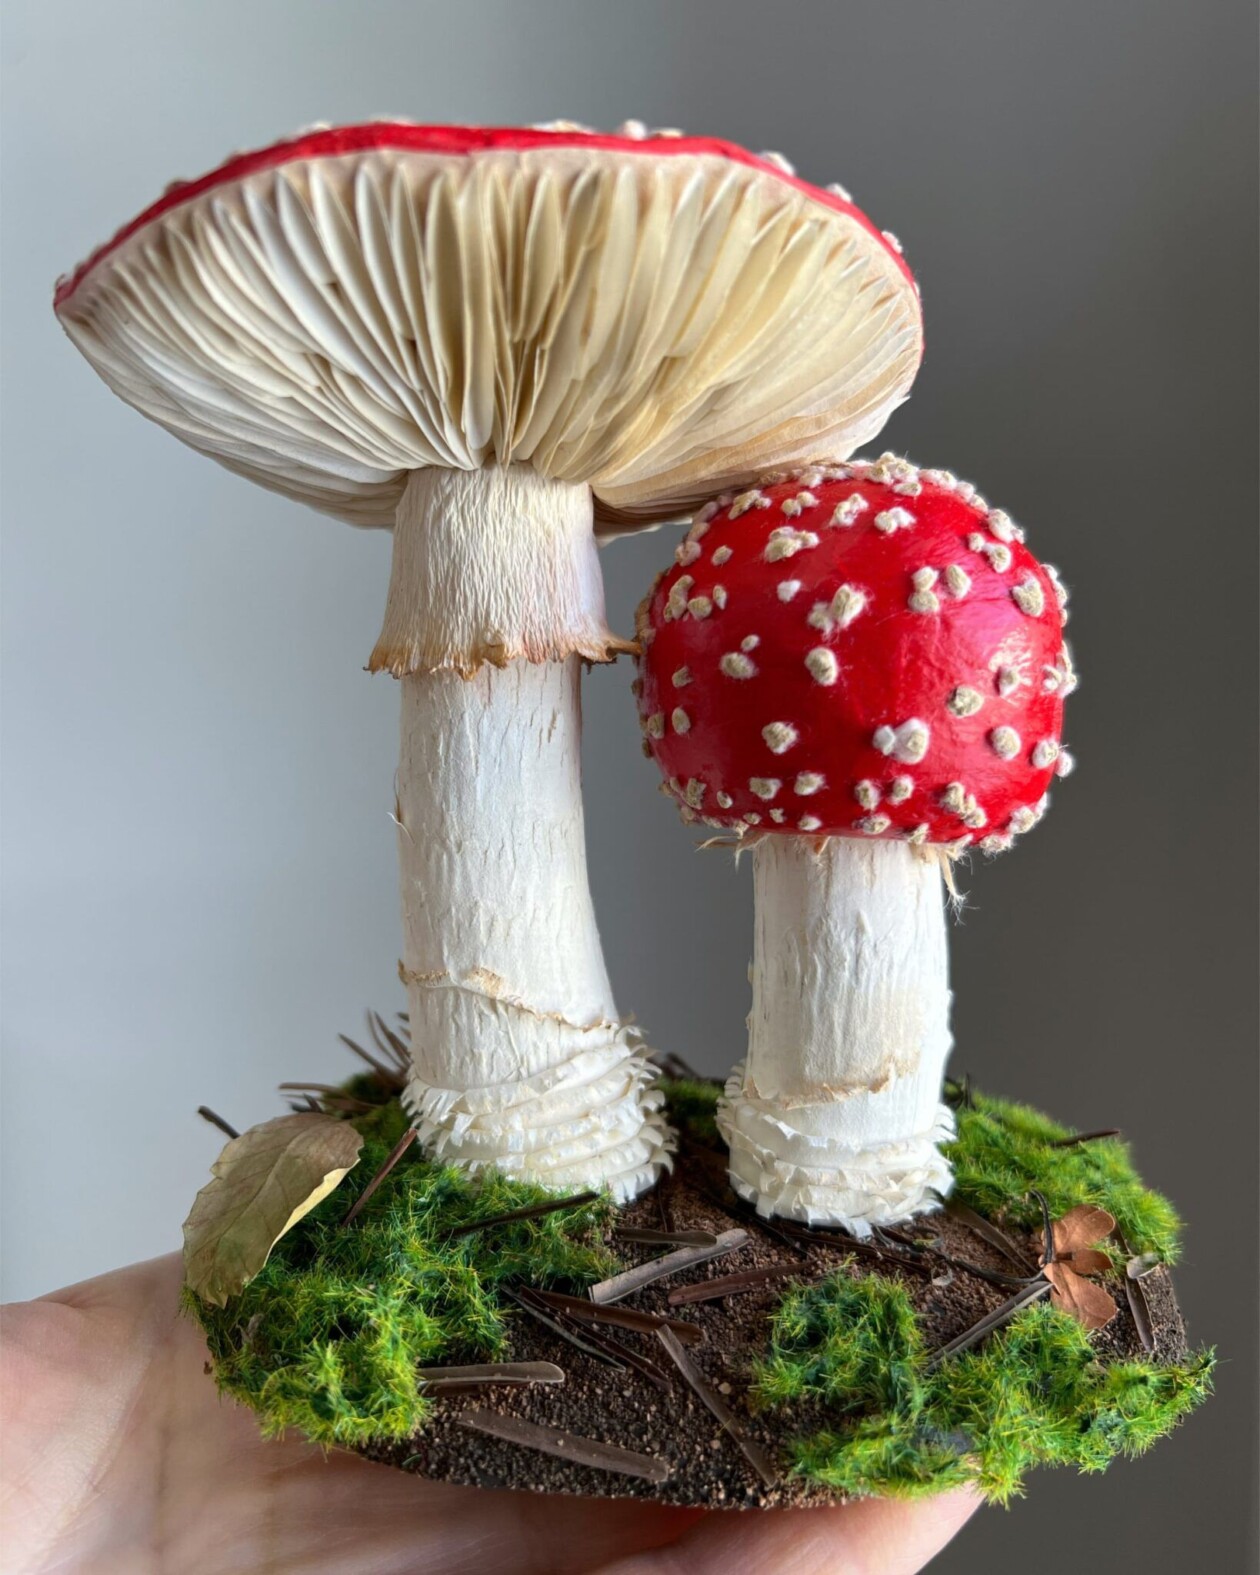 Splendid Lifelike Paper Sculptures Of Animals, Plants, Vegetables, And Mushrooms By ann Wood (13)